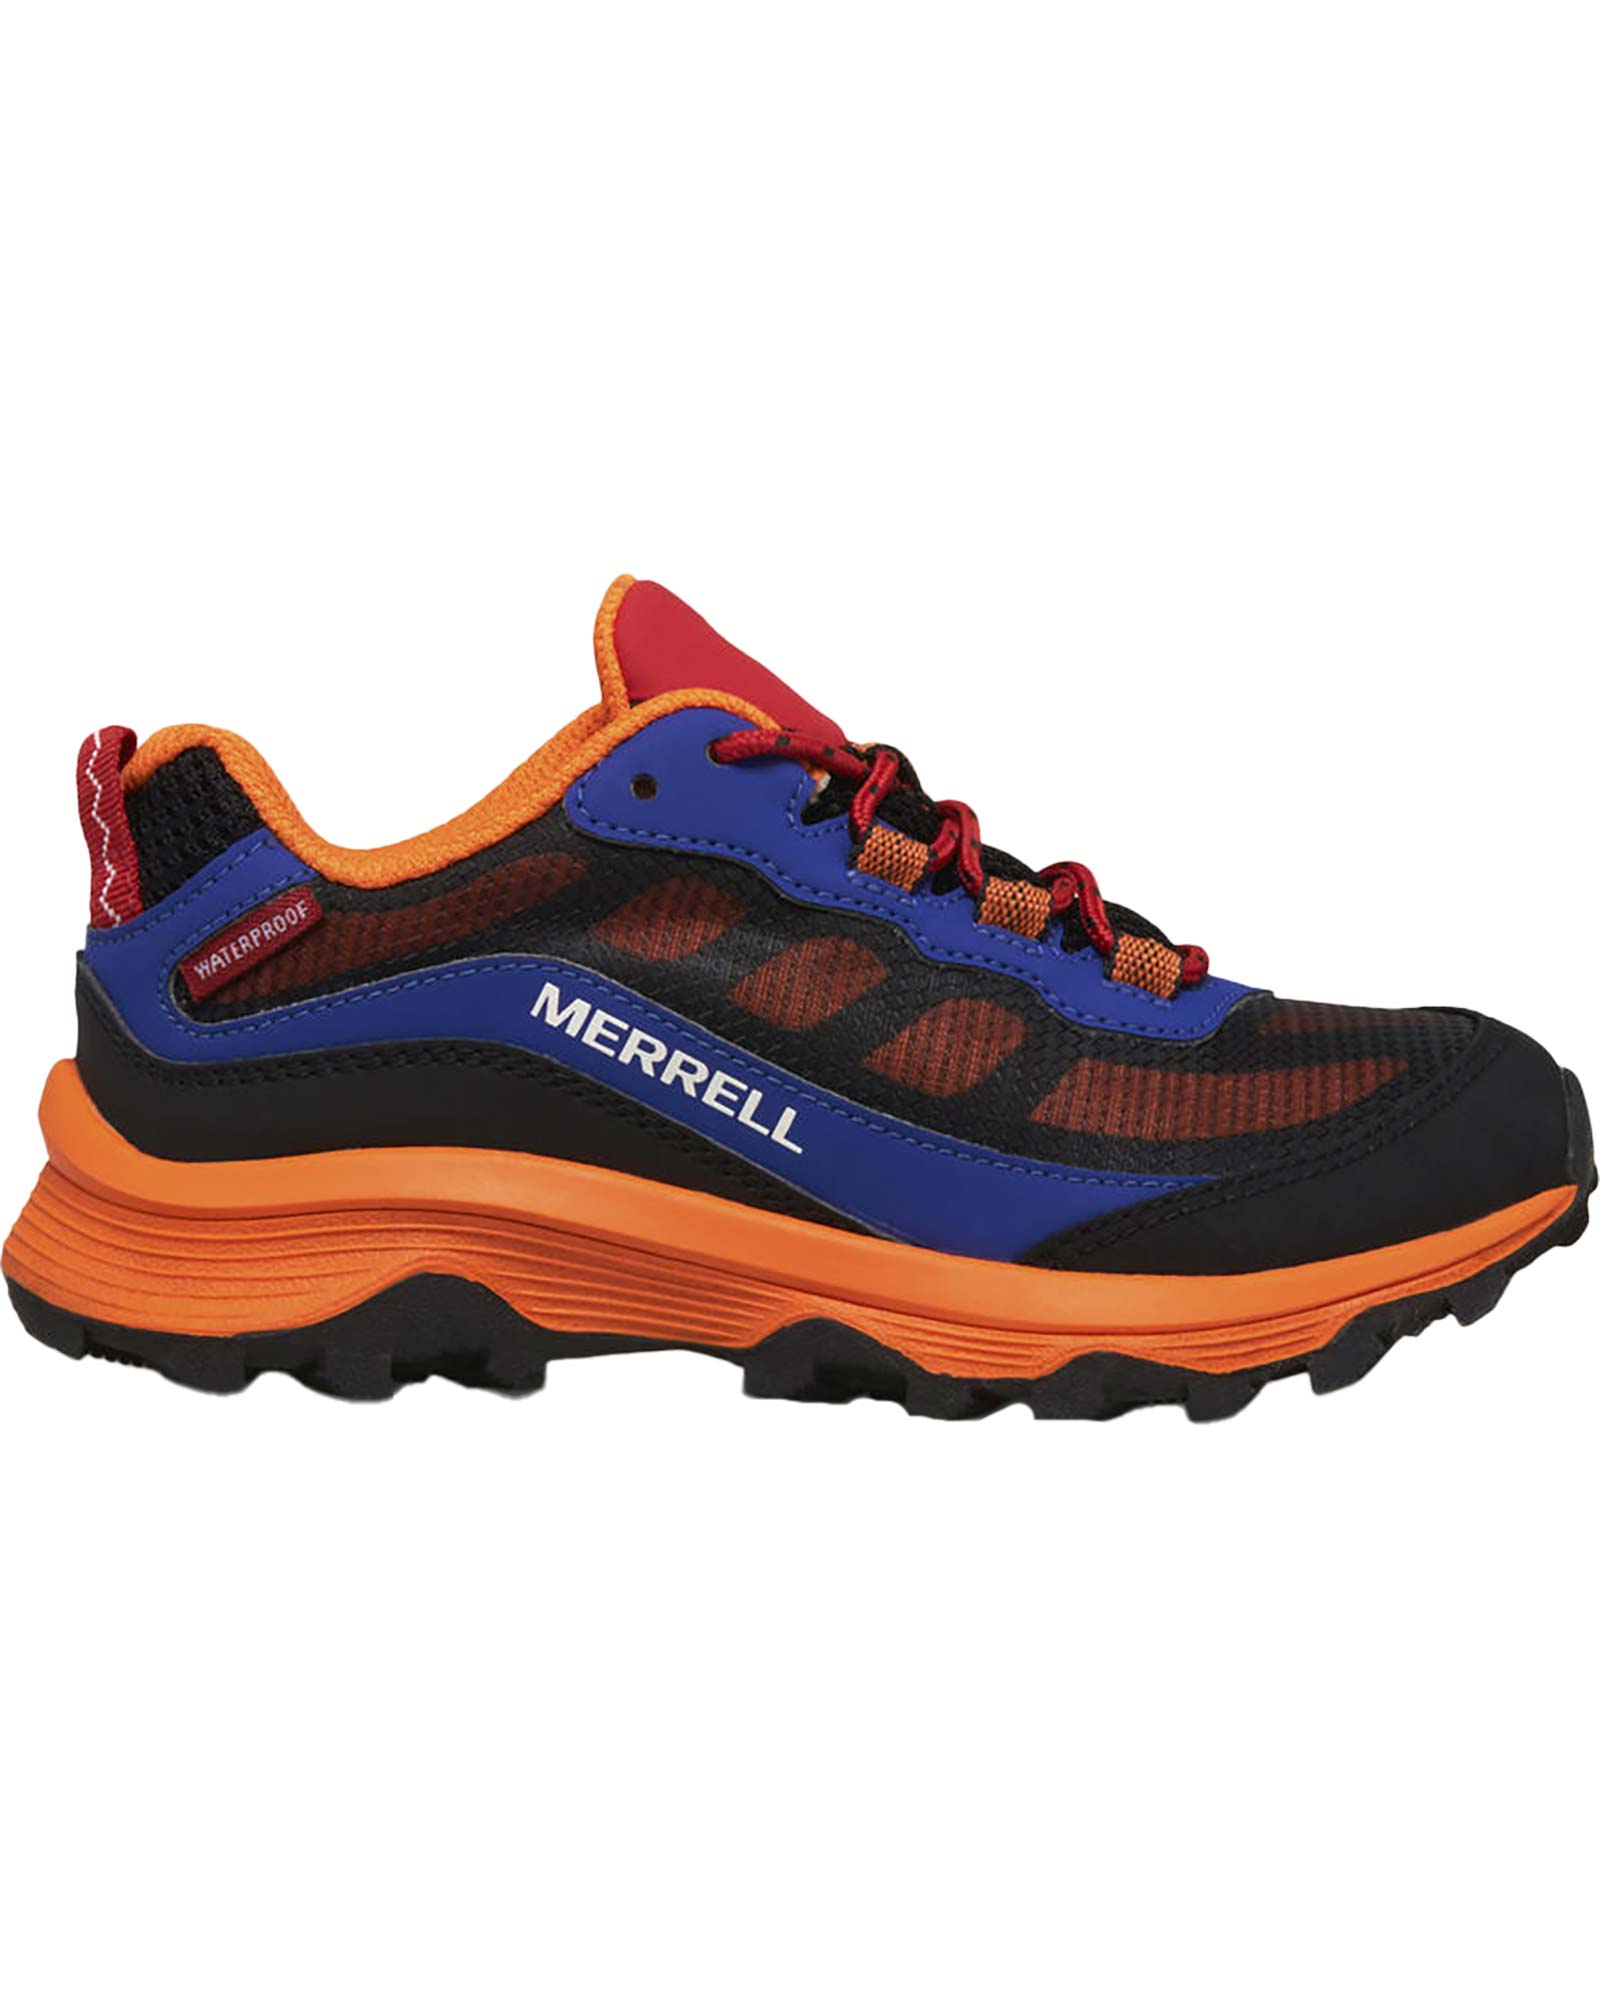 Merrell Moab Speed Laces Kids’ Waterproof Shoes - Blue/Black/Orange UK 2